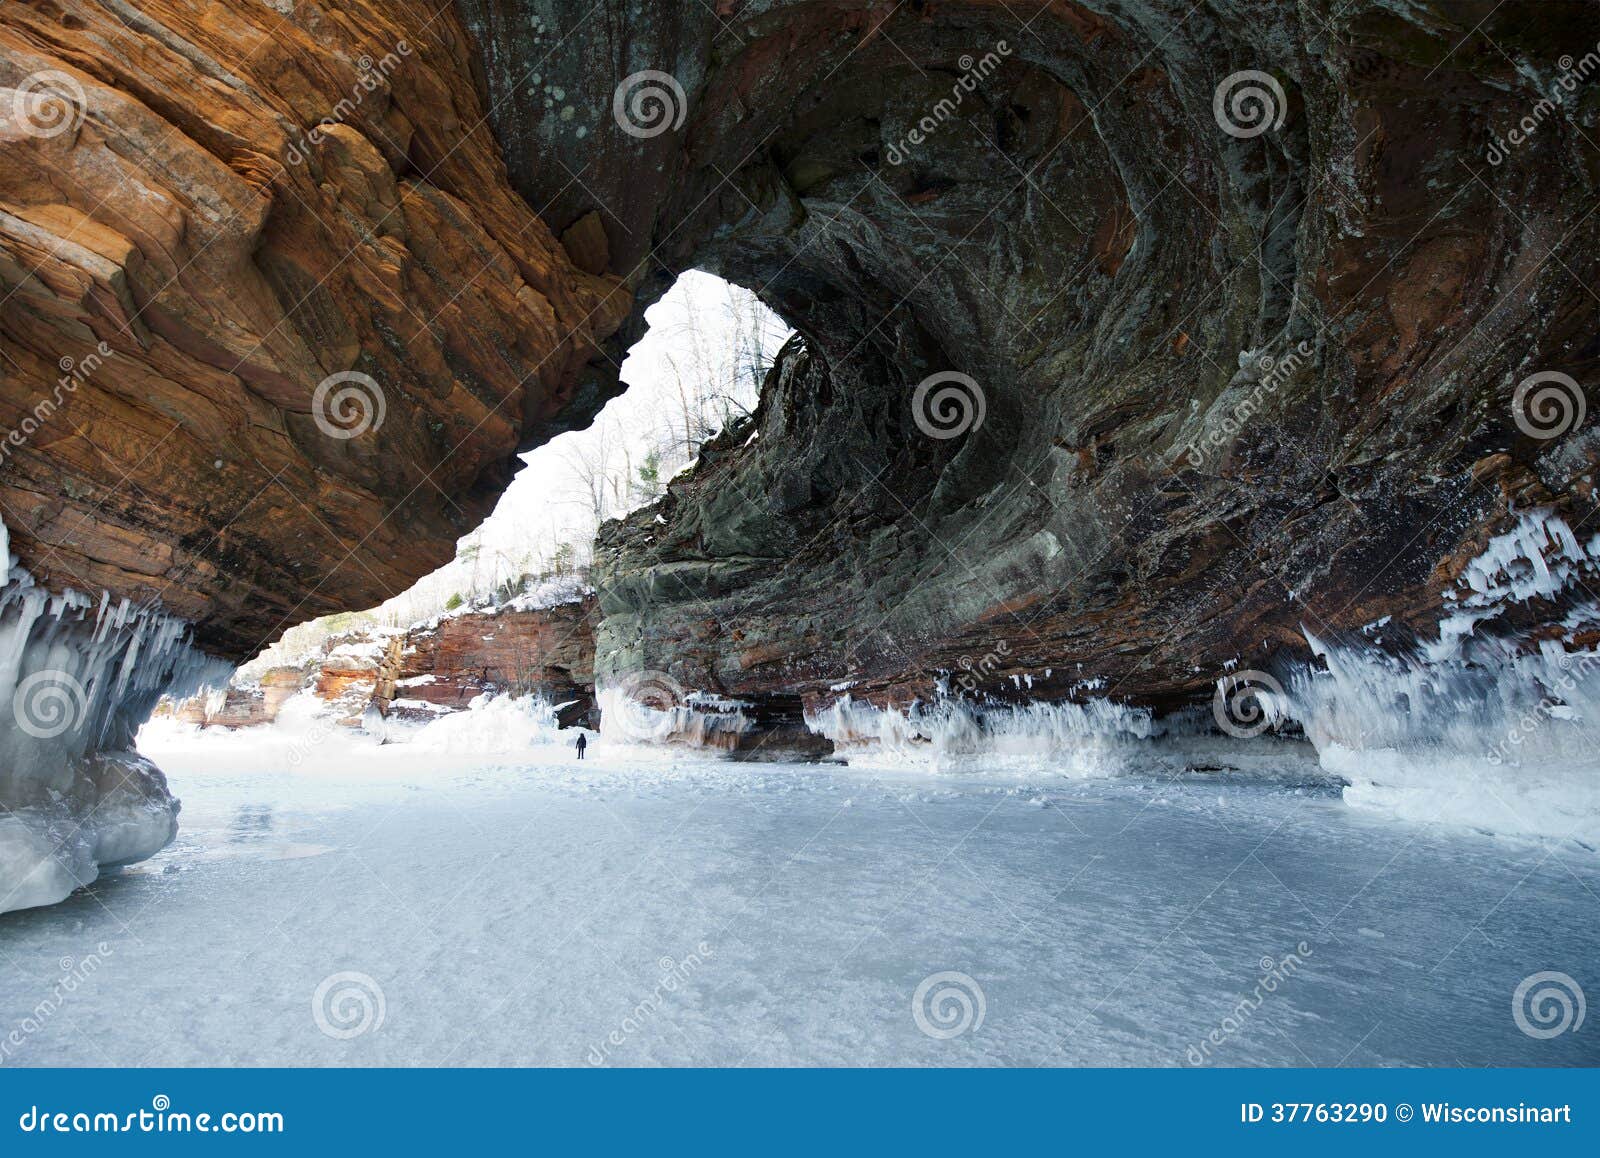 apostle islands ice caves, winter season